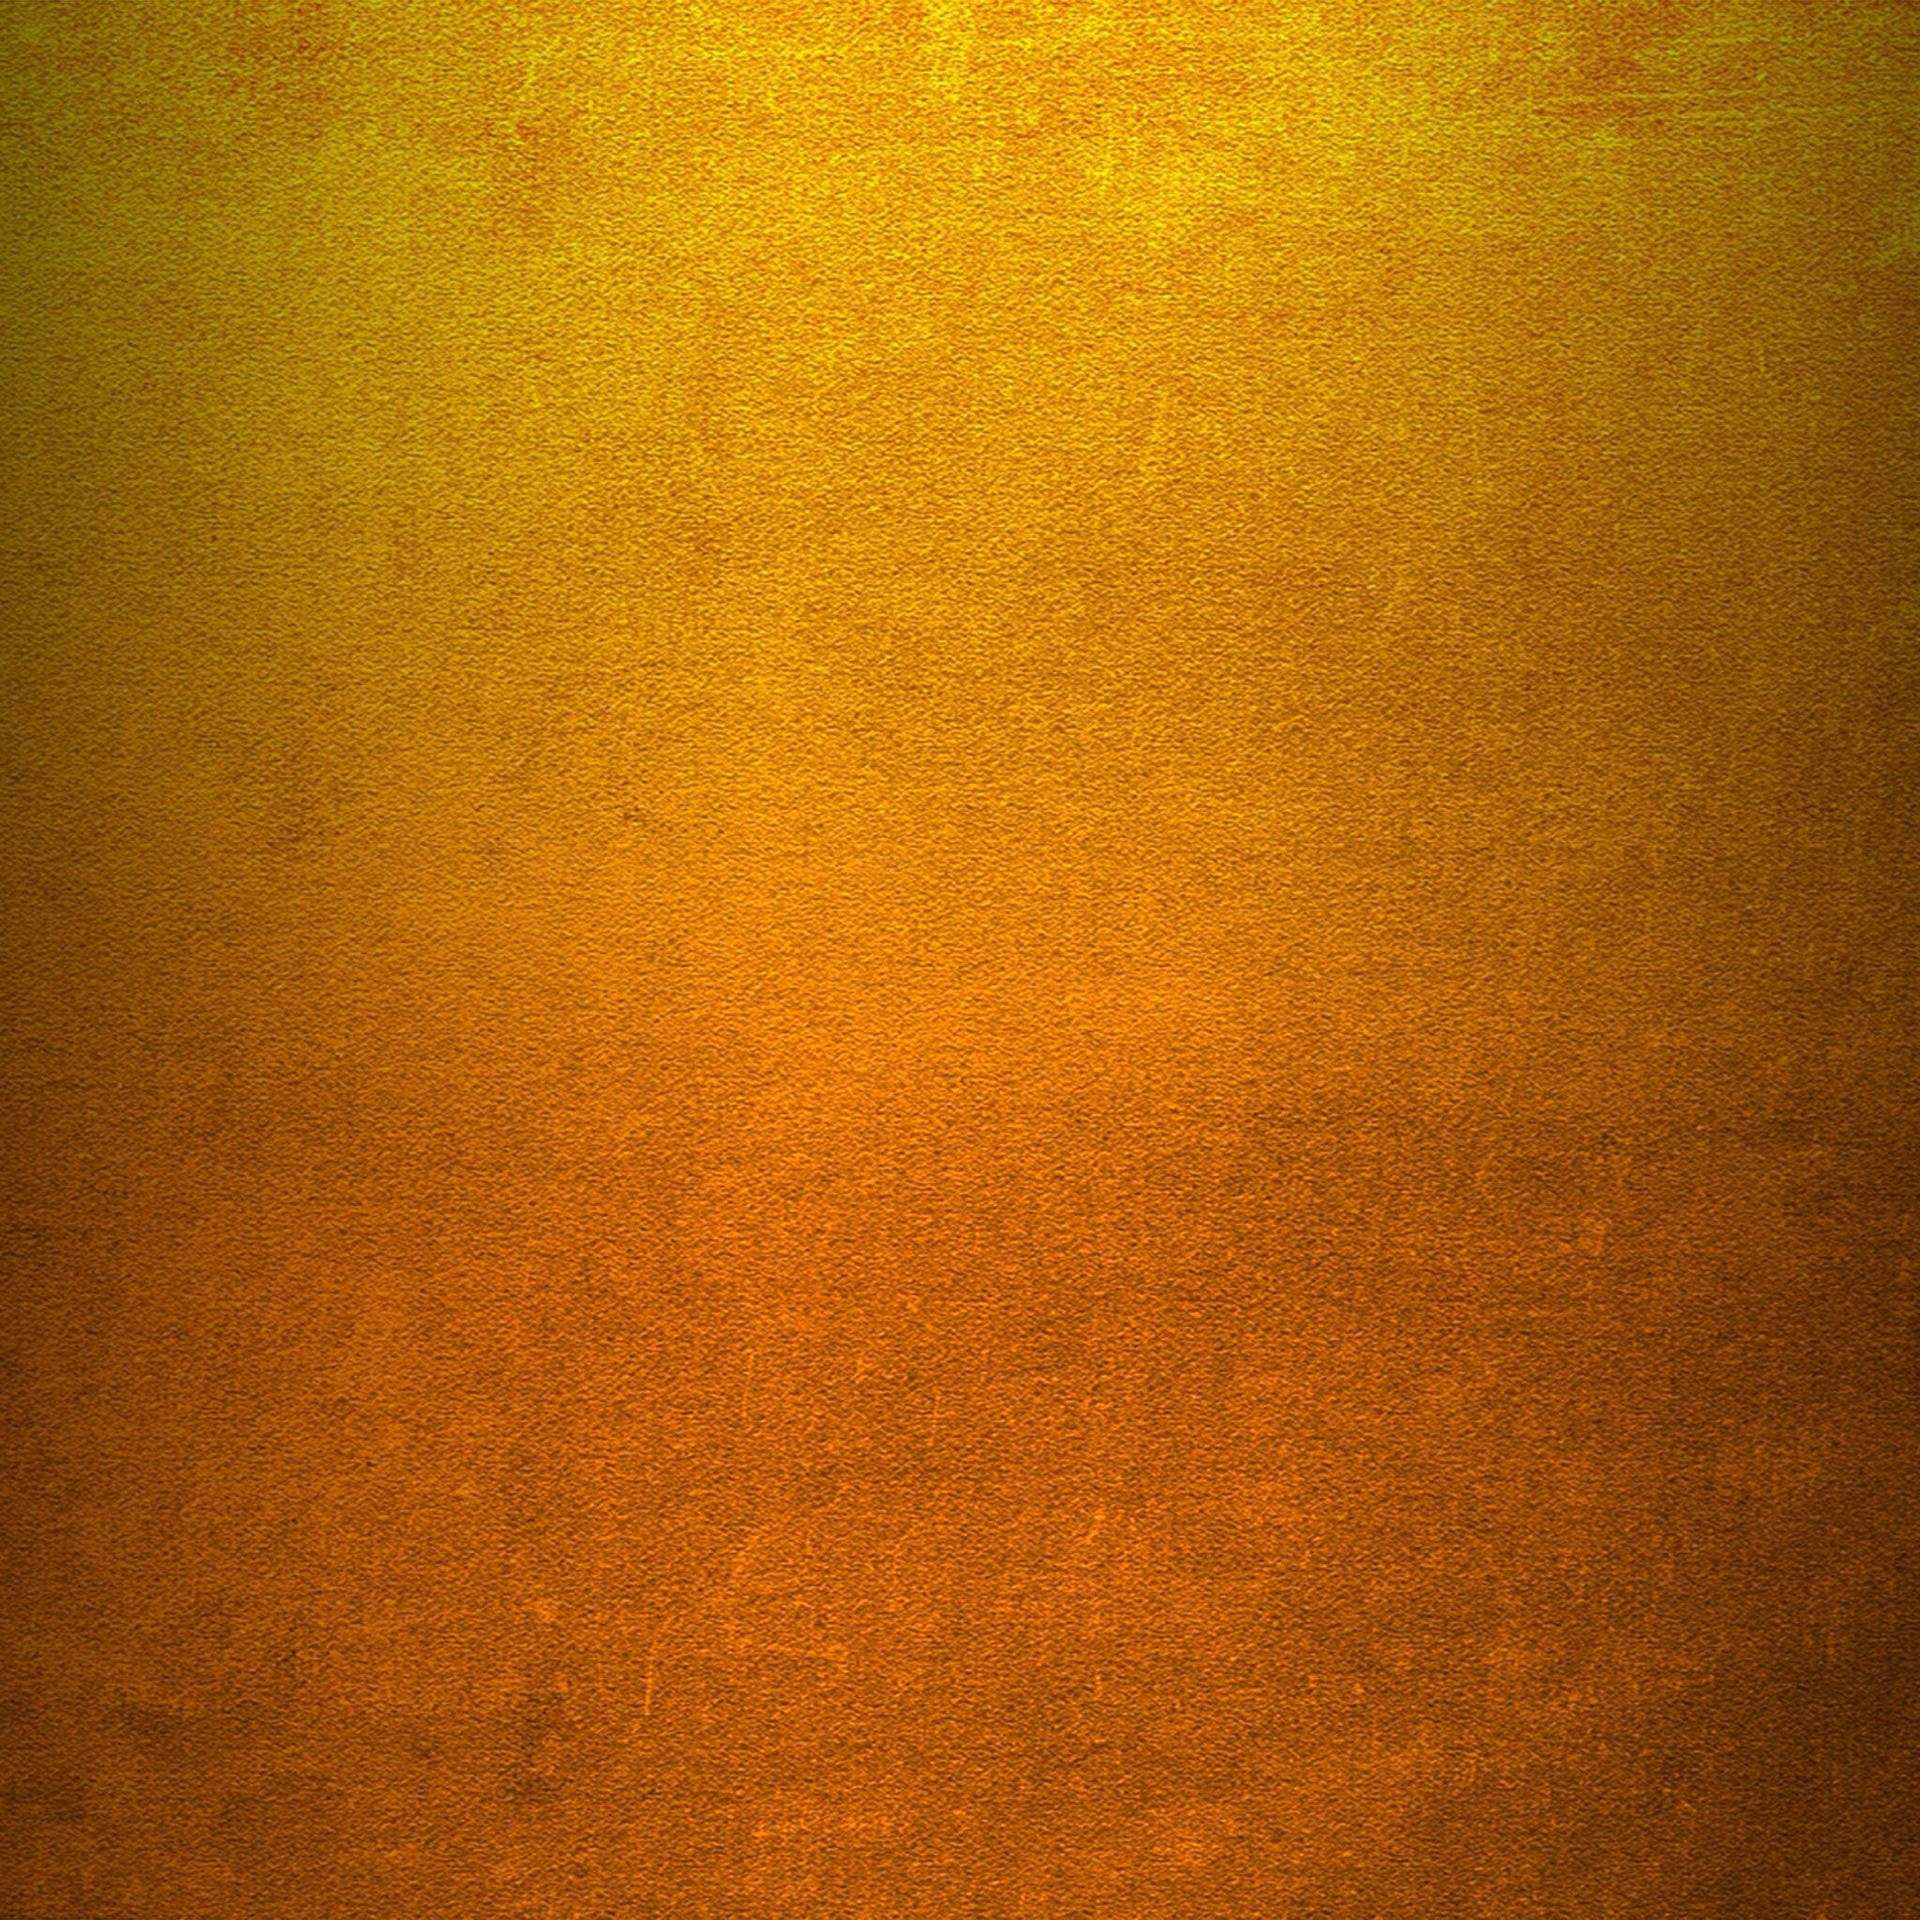 Blank Metallic Gold Background